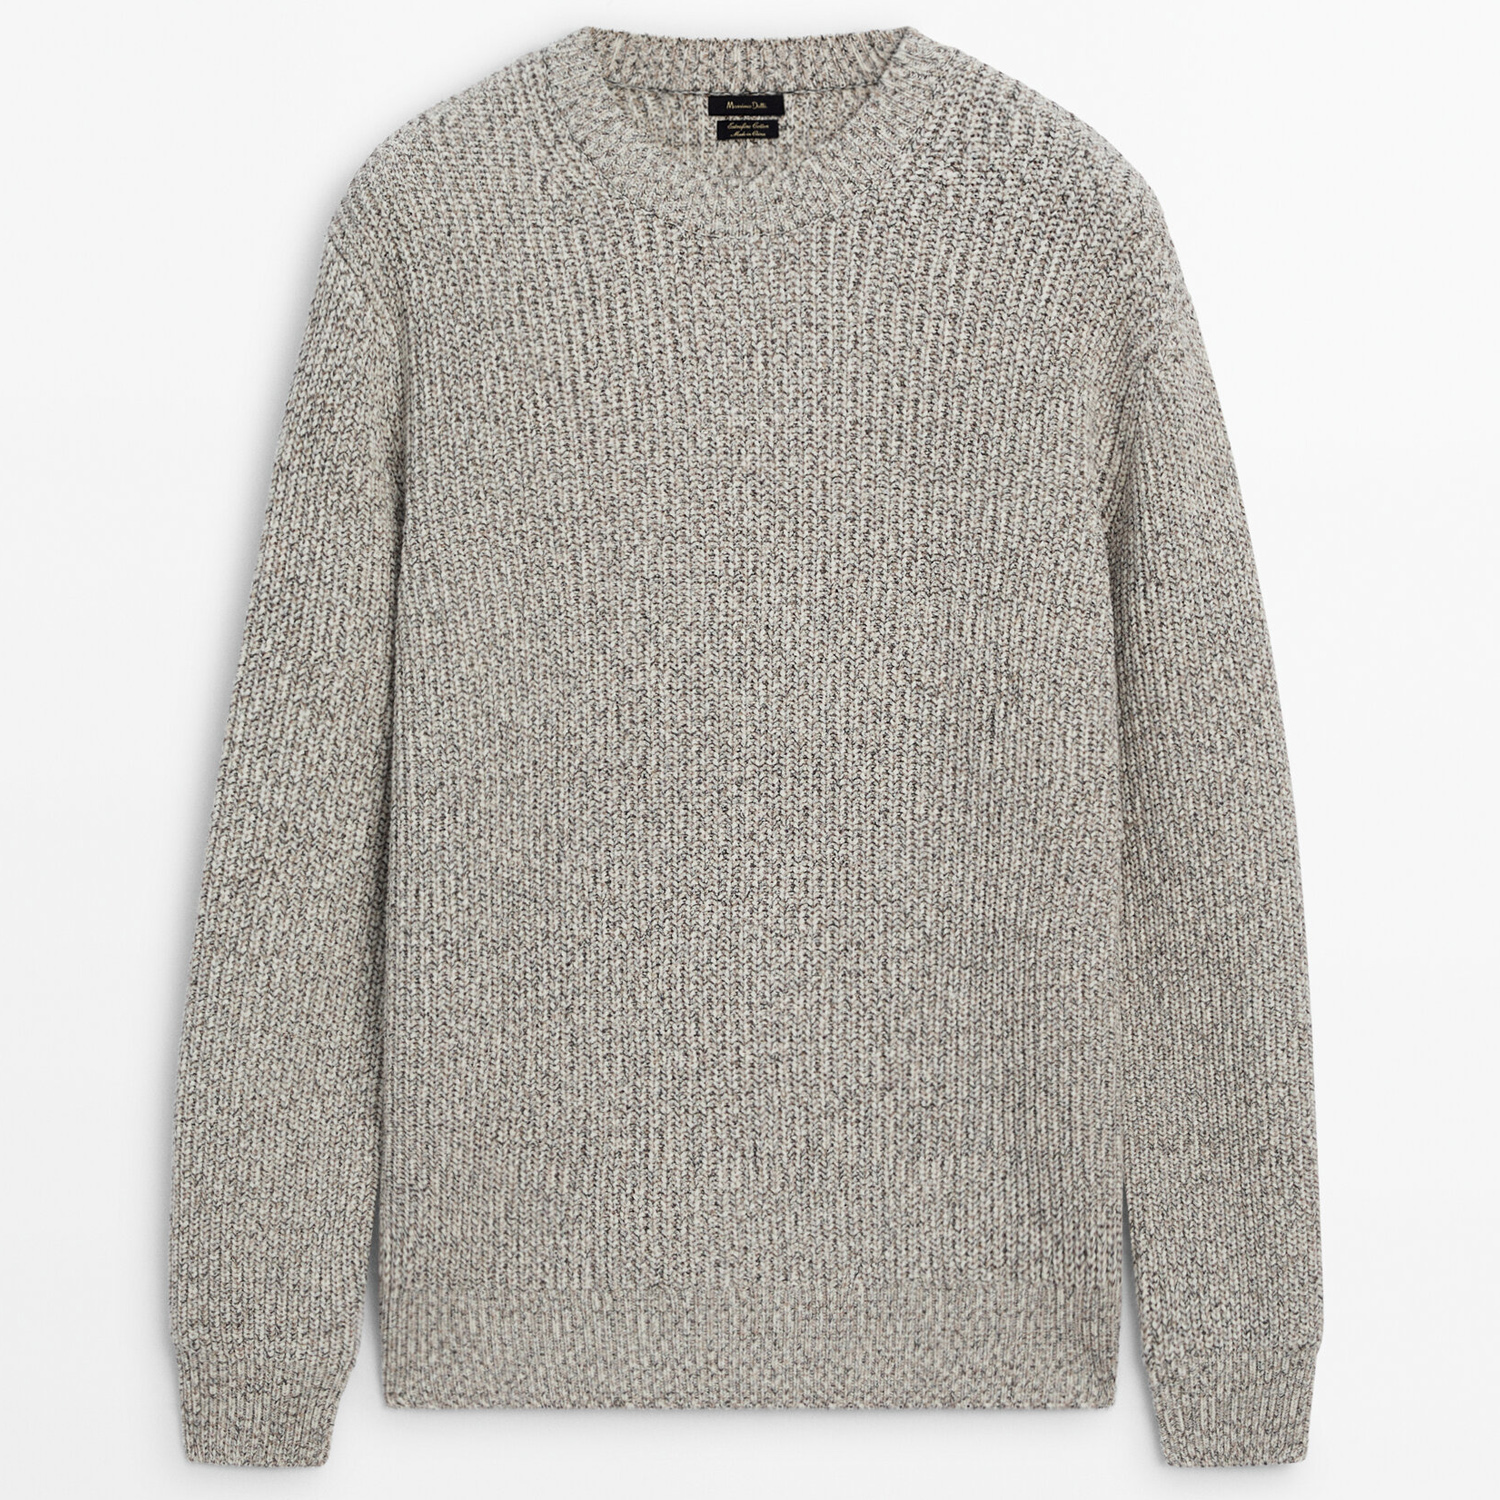 Свитер Massimo Dutti Cotton Blend Knit, кремовый свитер massimo dutti wool cashmere blend кремовый